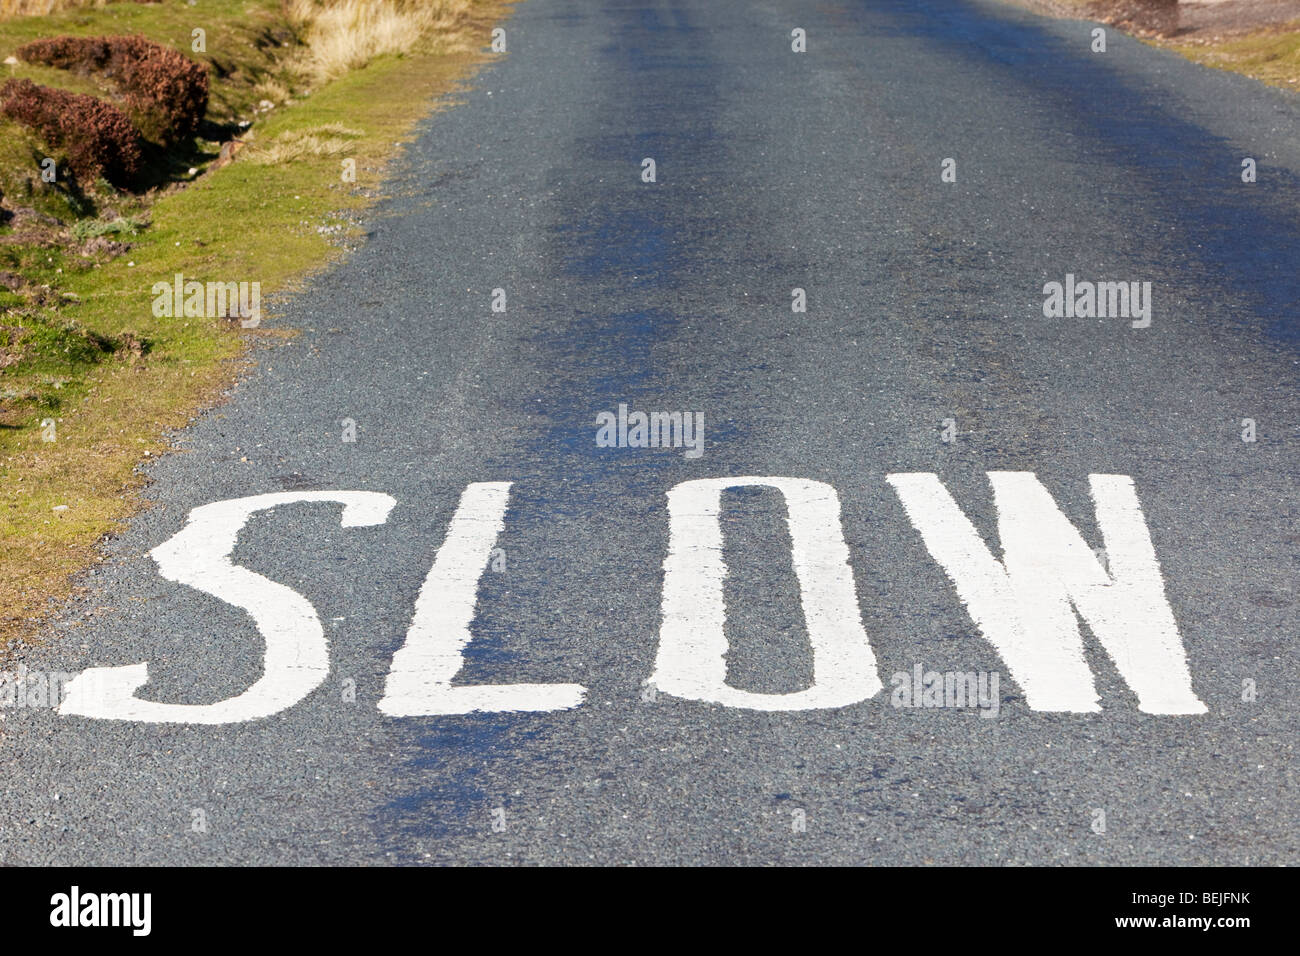 SLOW warning sign road markings painted on road surface England UK Stock Photo